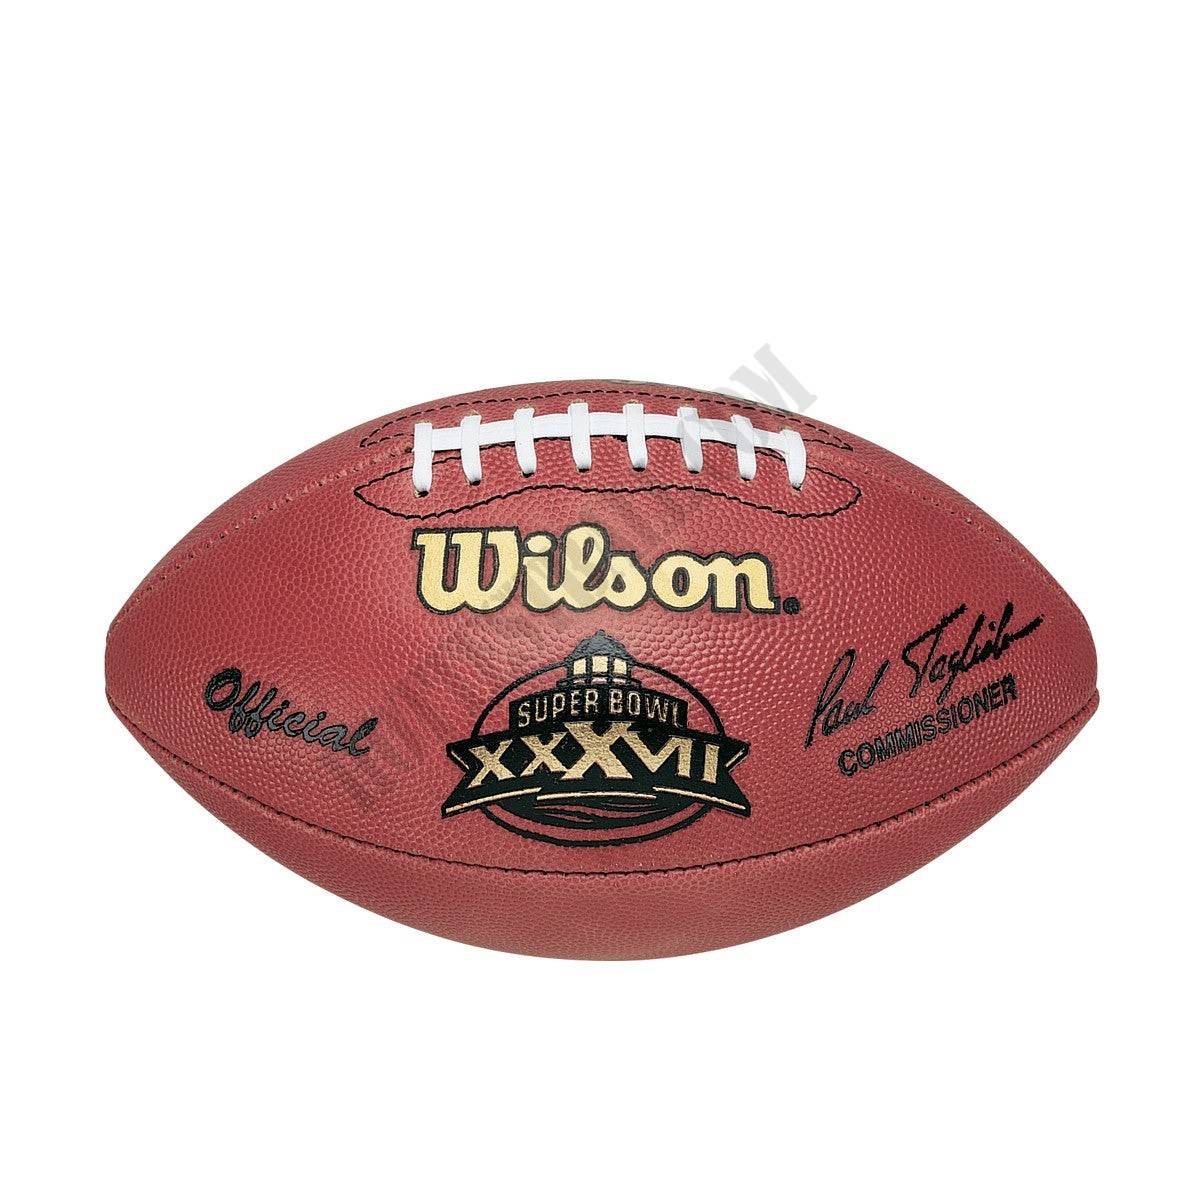 Super Bowl XXXVII Game Football - Tampa Bay Buccaneers ● Wilson Promotions - Super Bowl XXXVII Game Football - Tampa Bay Buccaneers ● Wilson Promotions